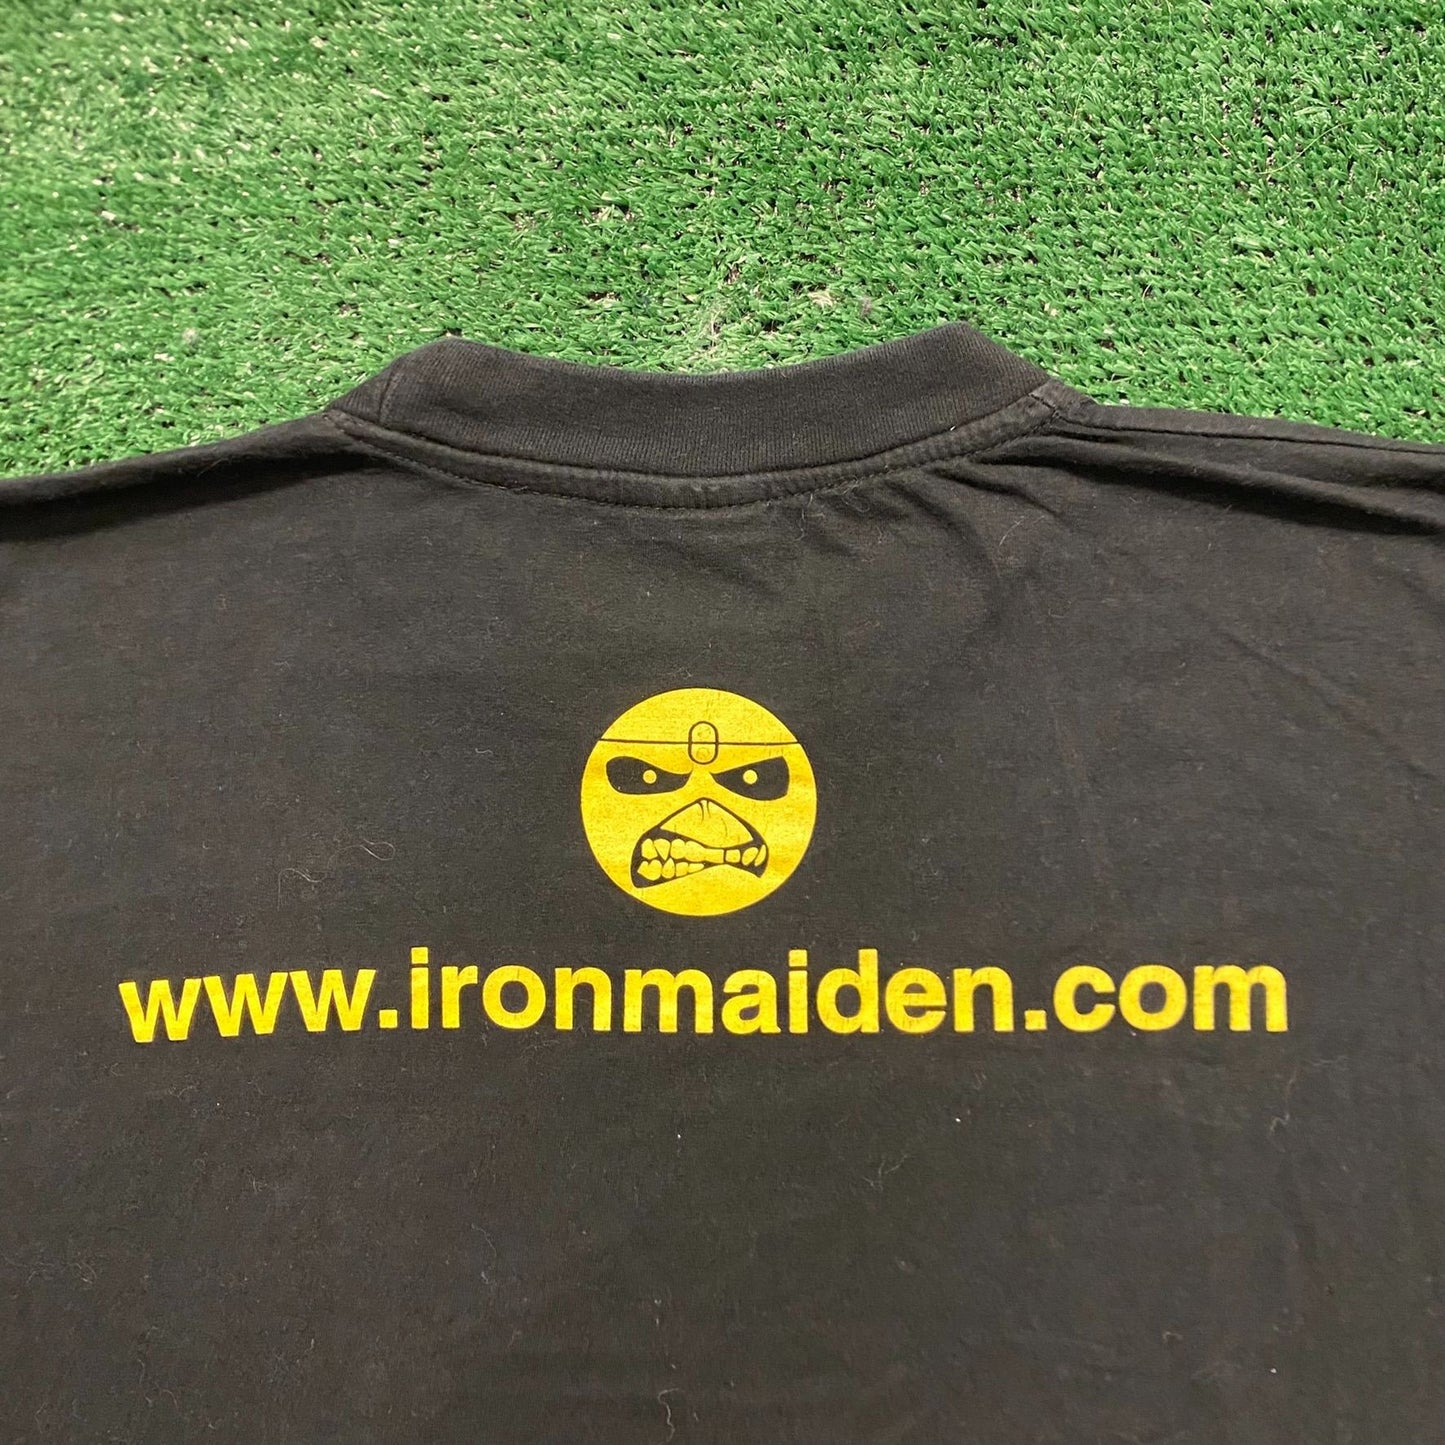 Iron Maiden Vintage Metal Band T-Shirt